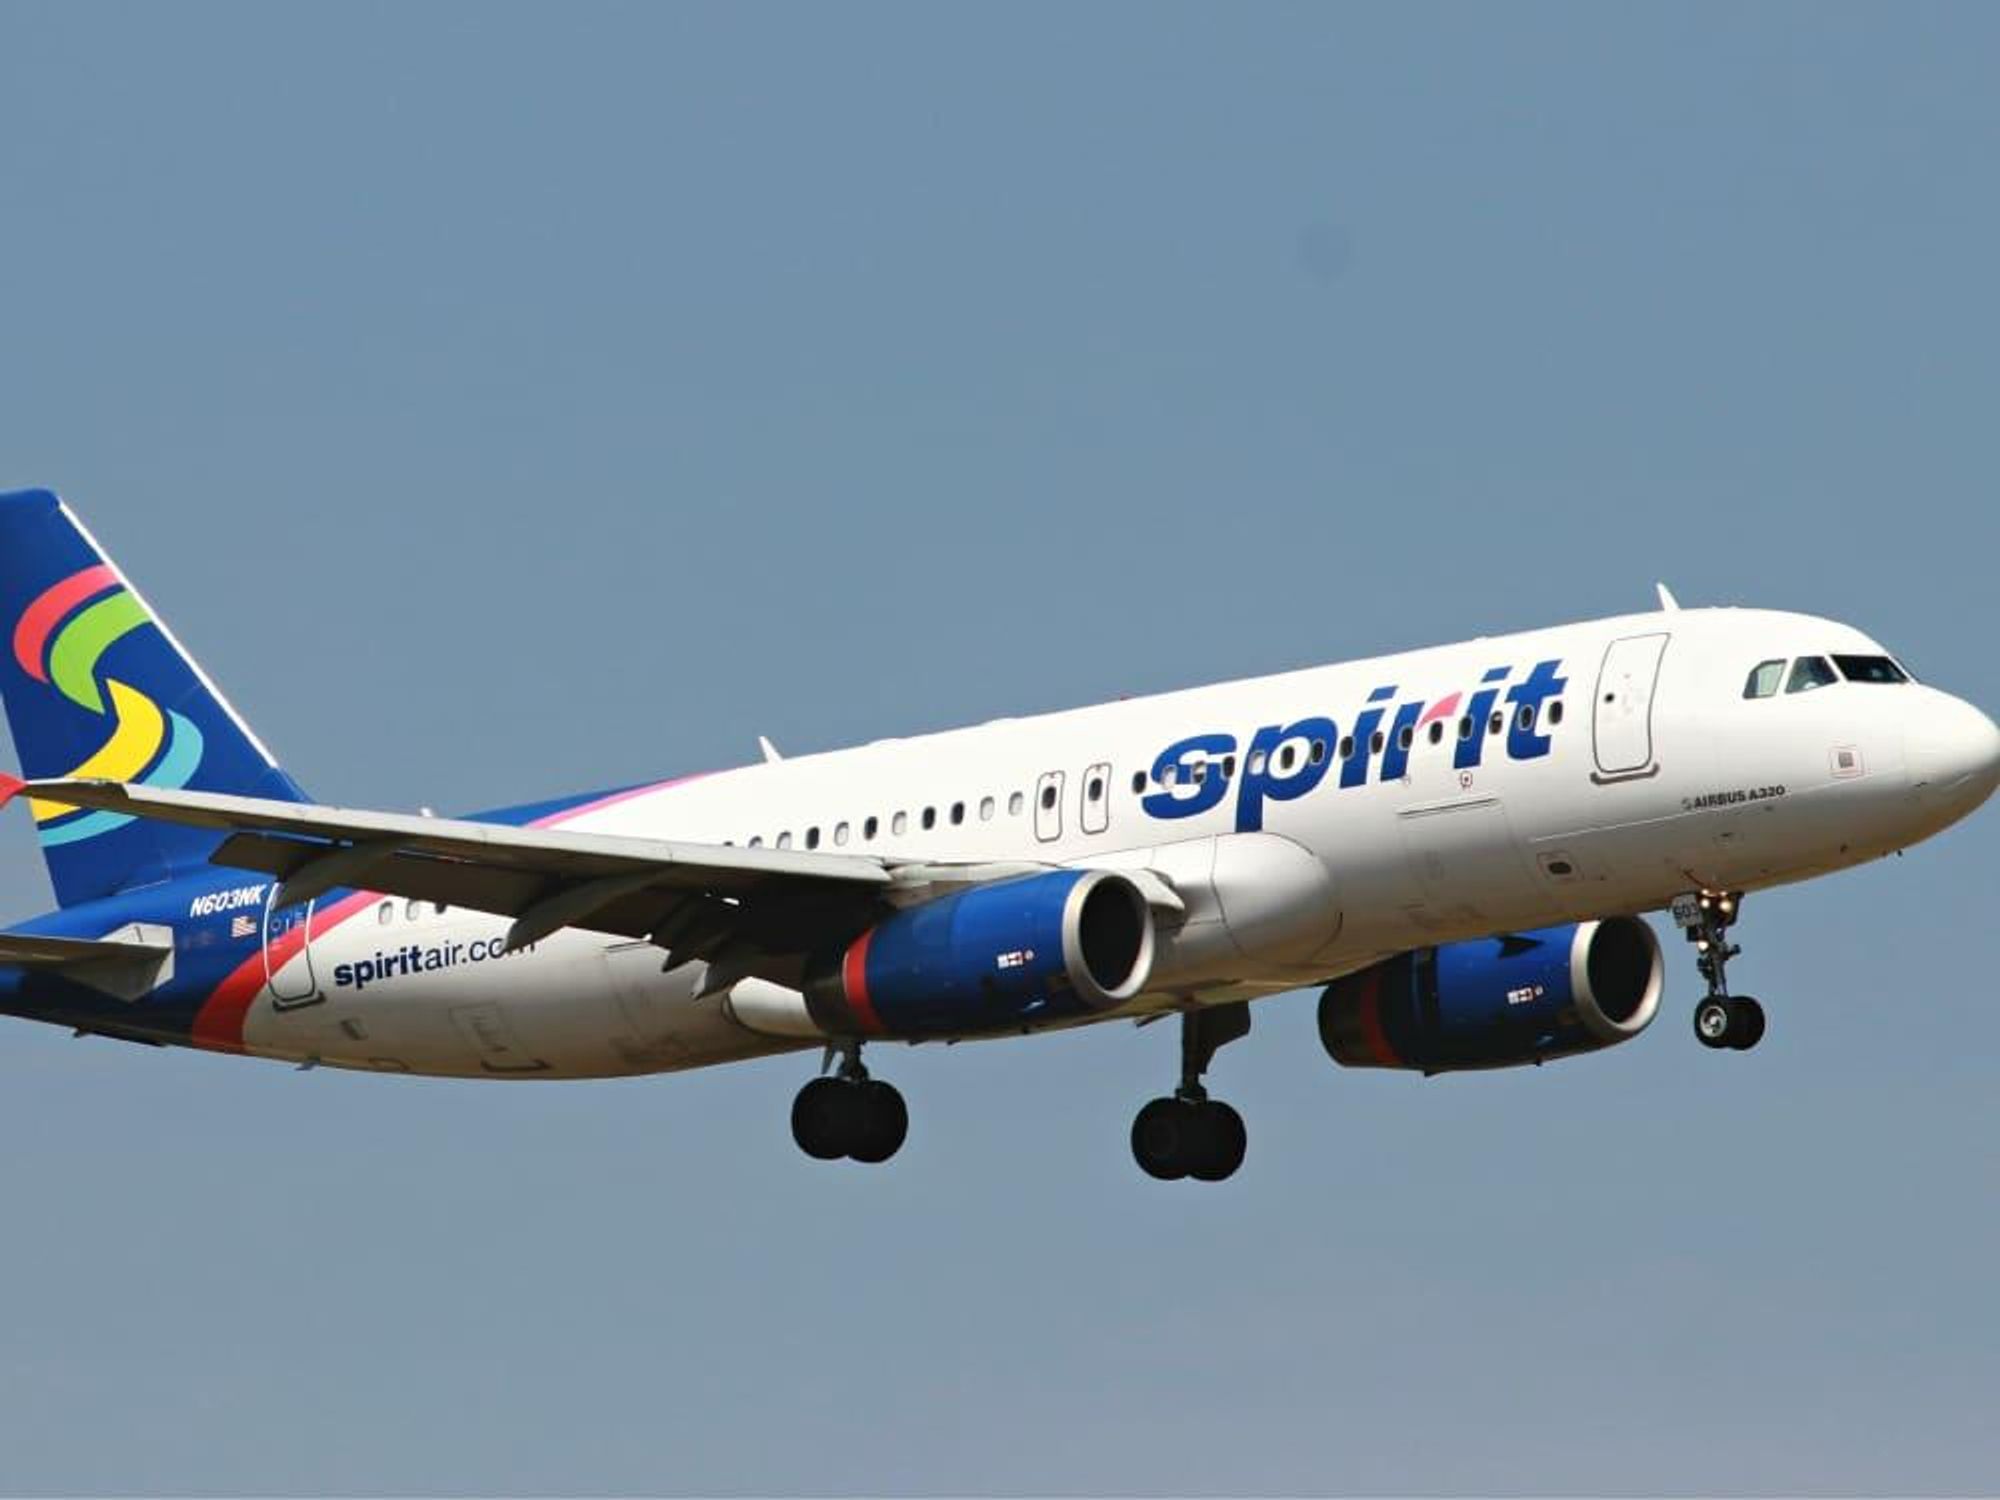 Spirit Airlines jets